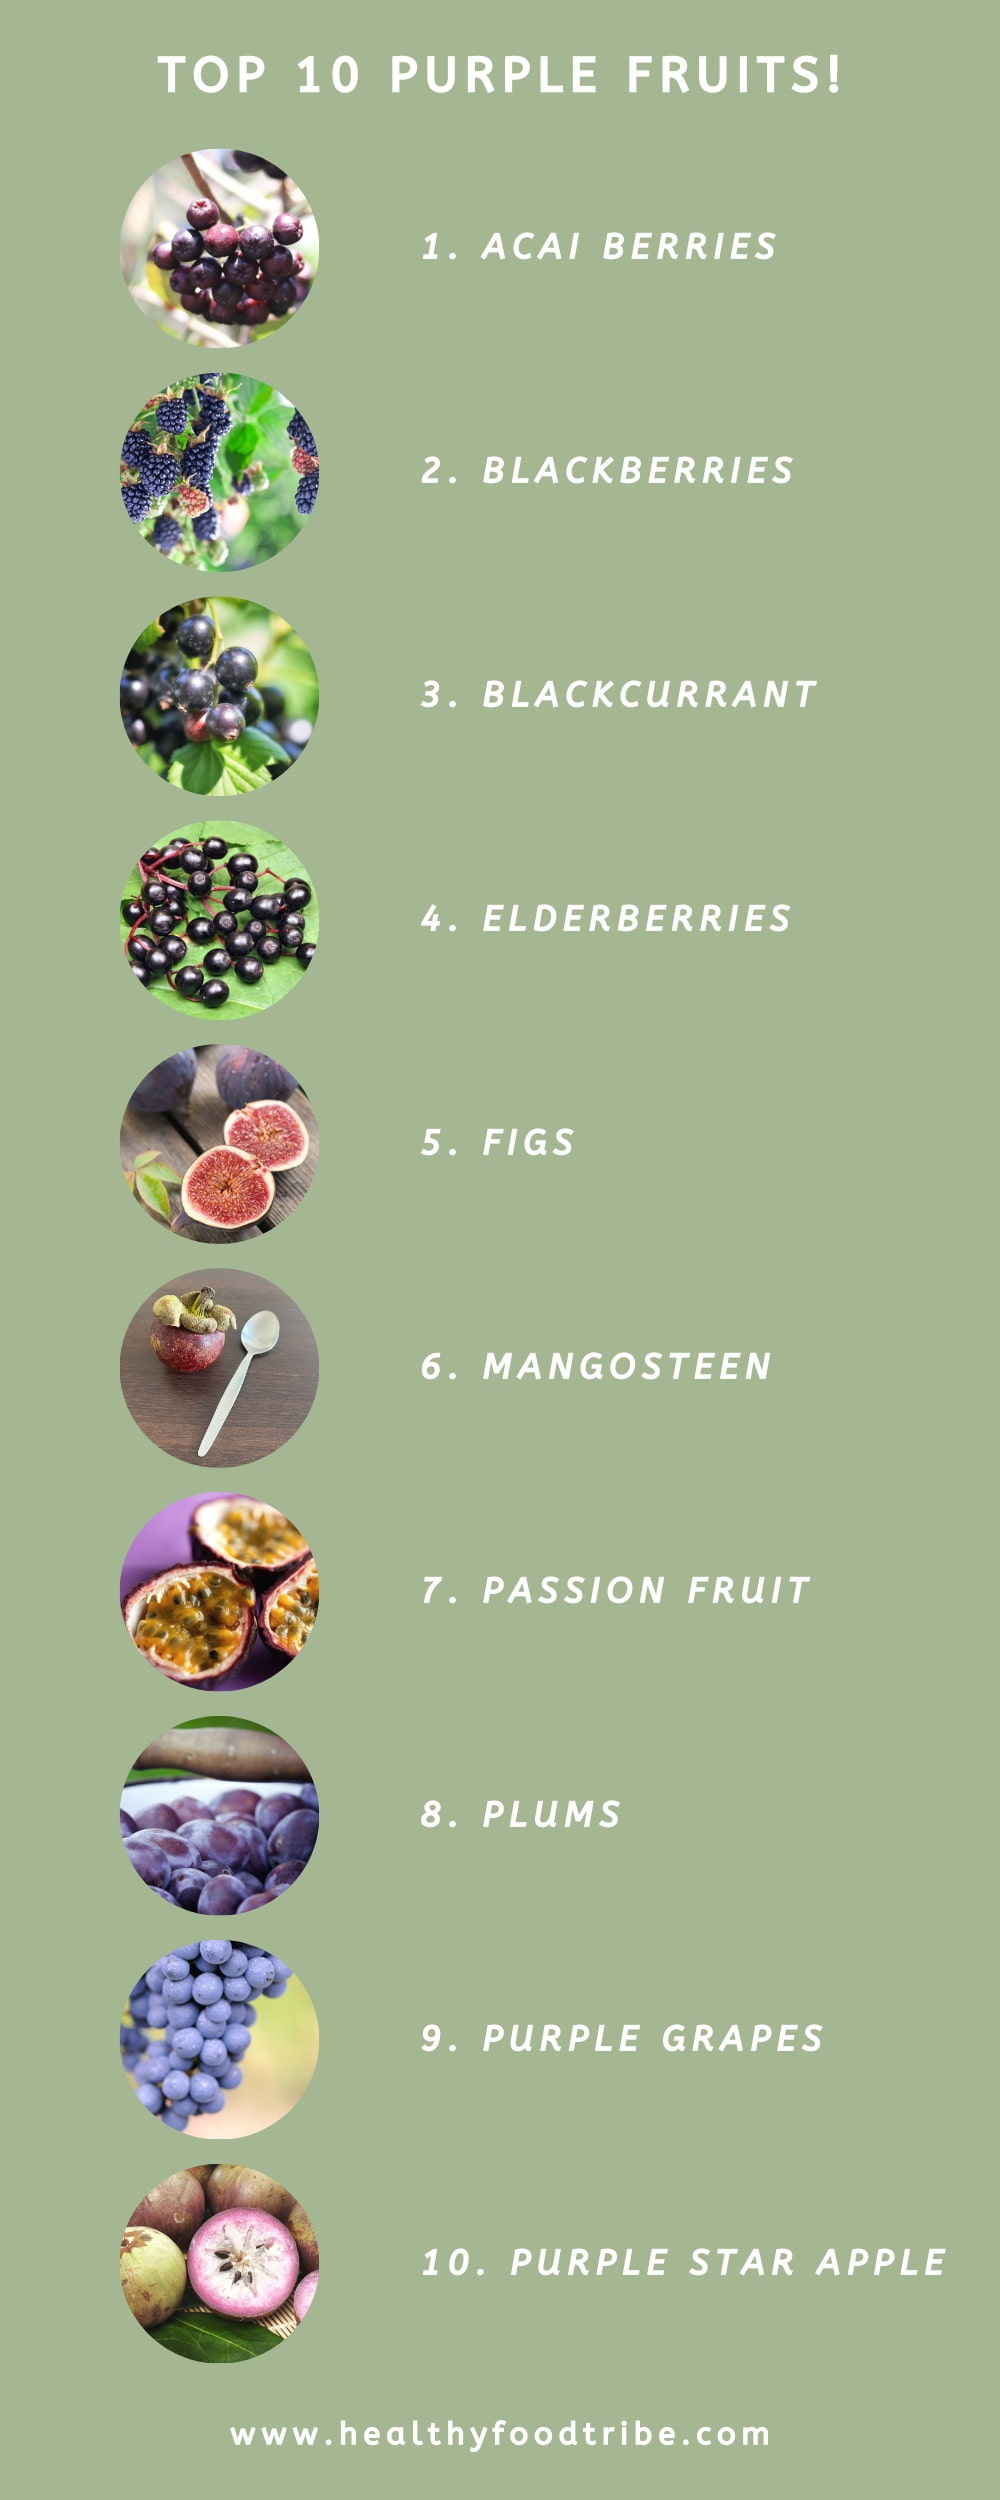 List of purple fruits